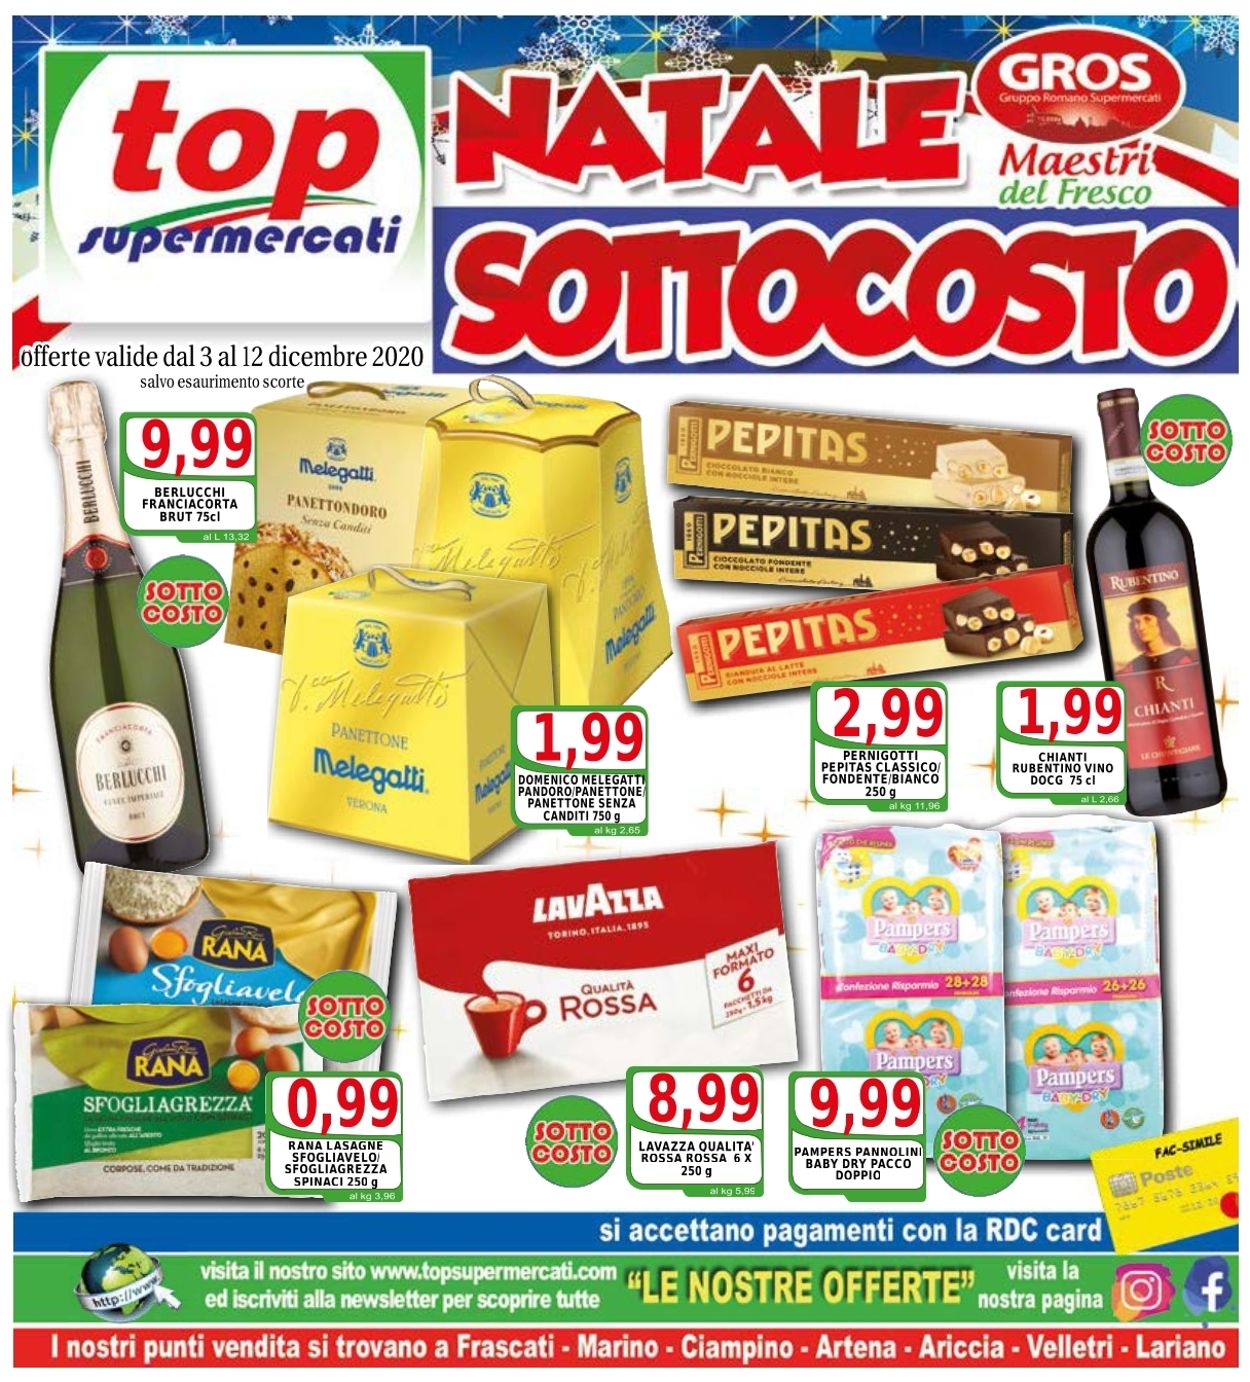 Volantino Top Supermercati - Natale 2020 - Offerte 03/12-12/12/2020